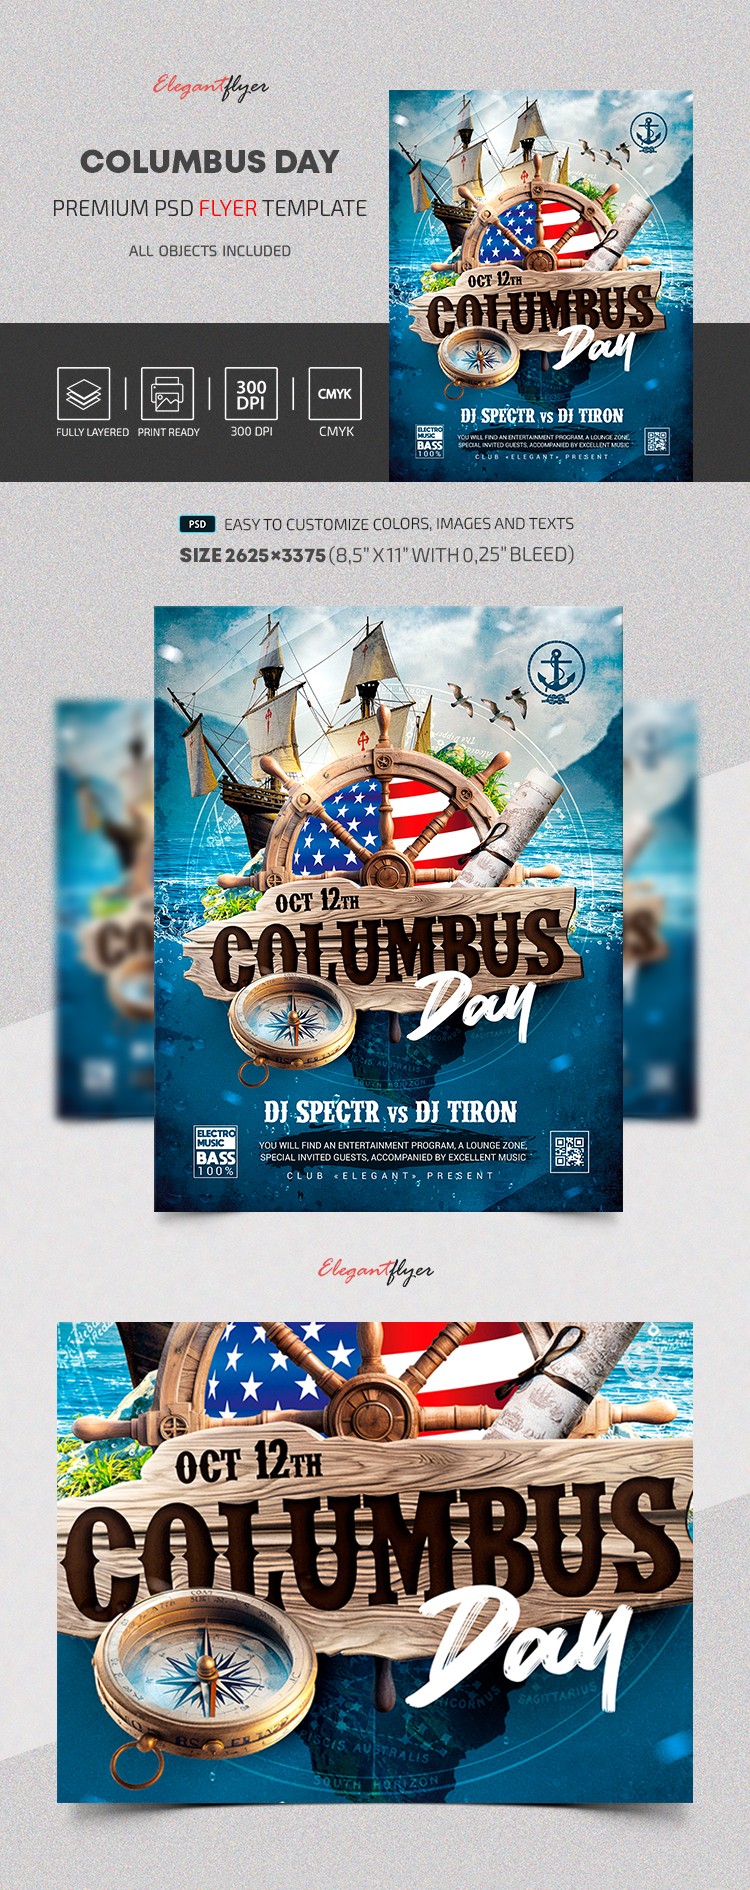 Columbus Day Party -> Kolumbus-Tag Party by ElegantFlyer